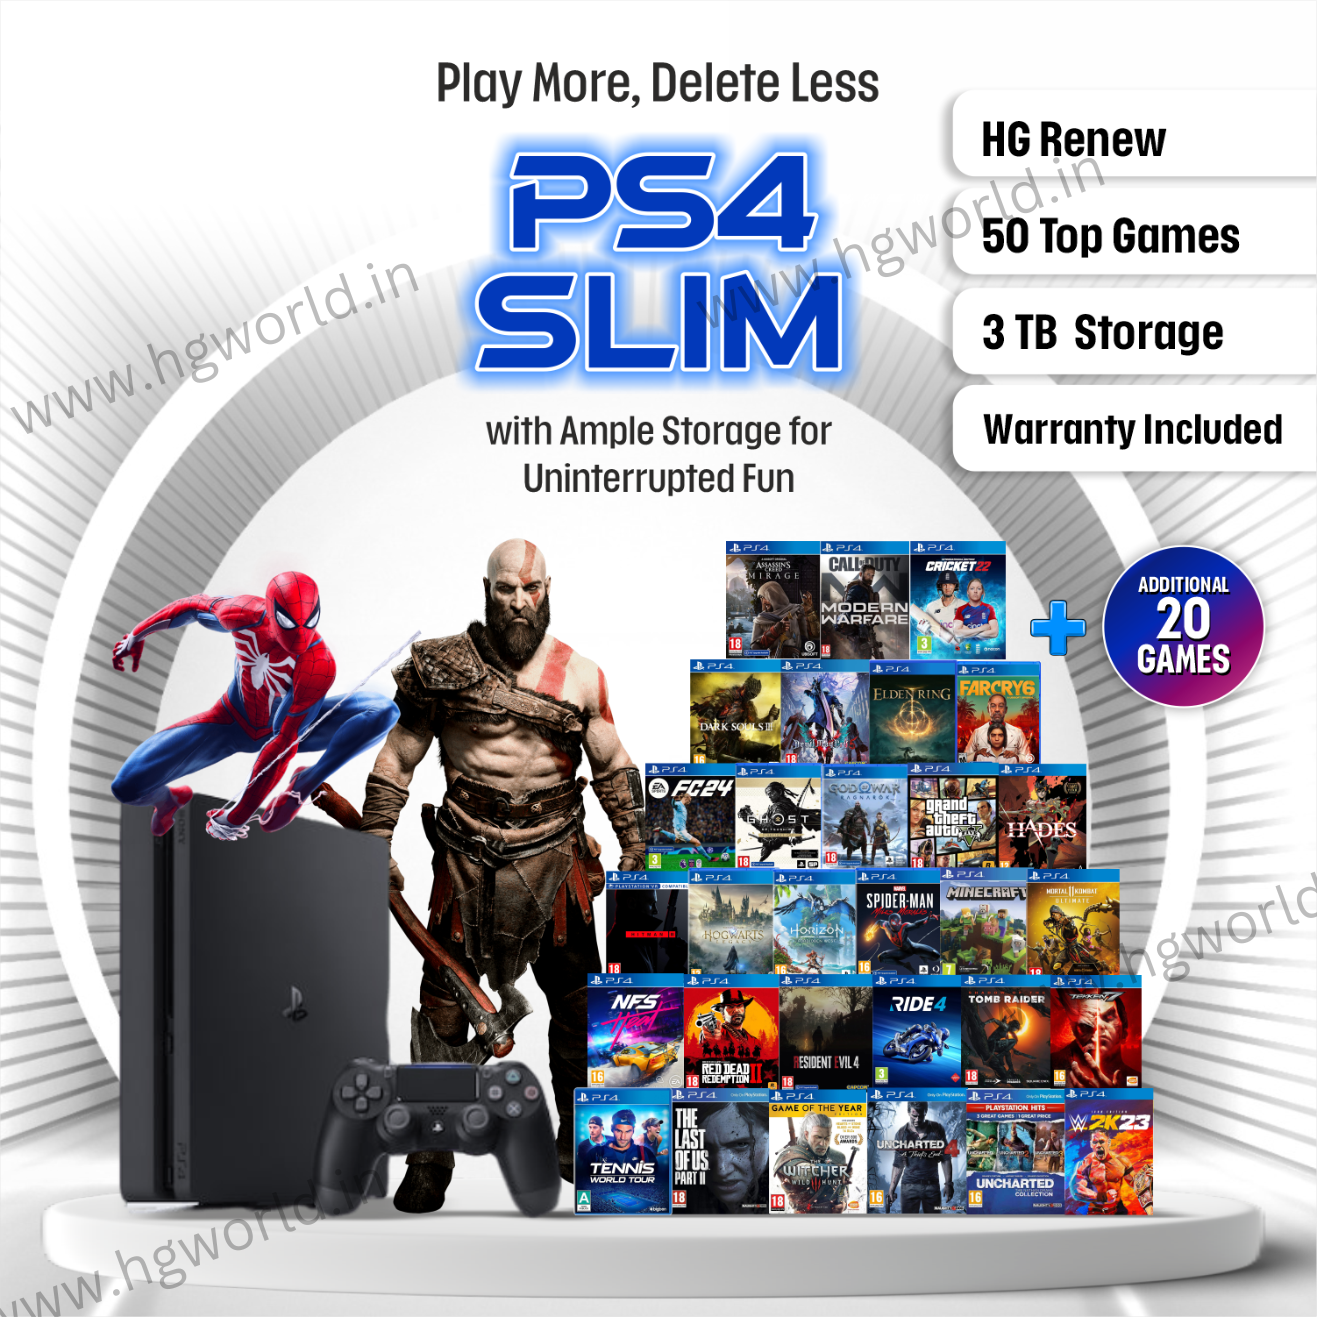 PS4 Slim, 3TB, 45 Top Games Free, HG ReNew